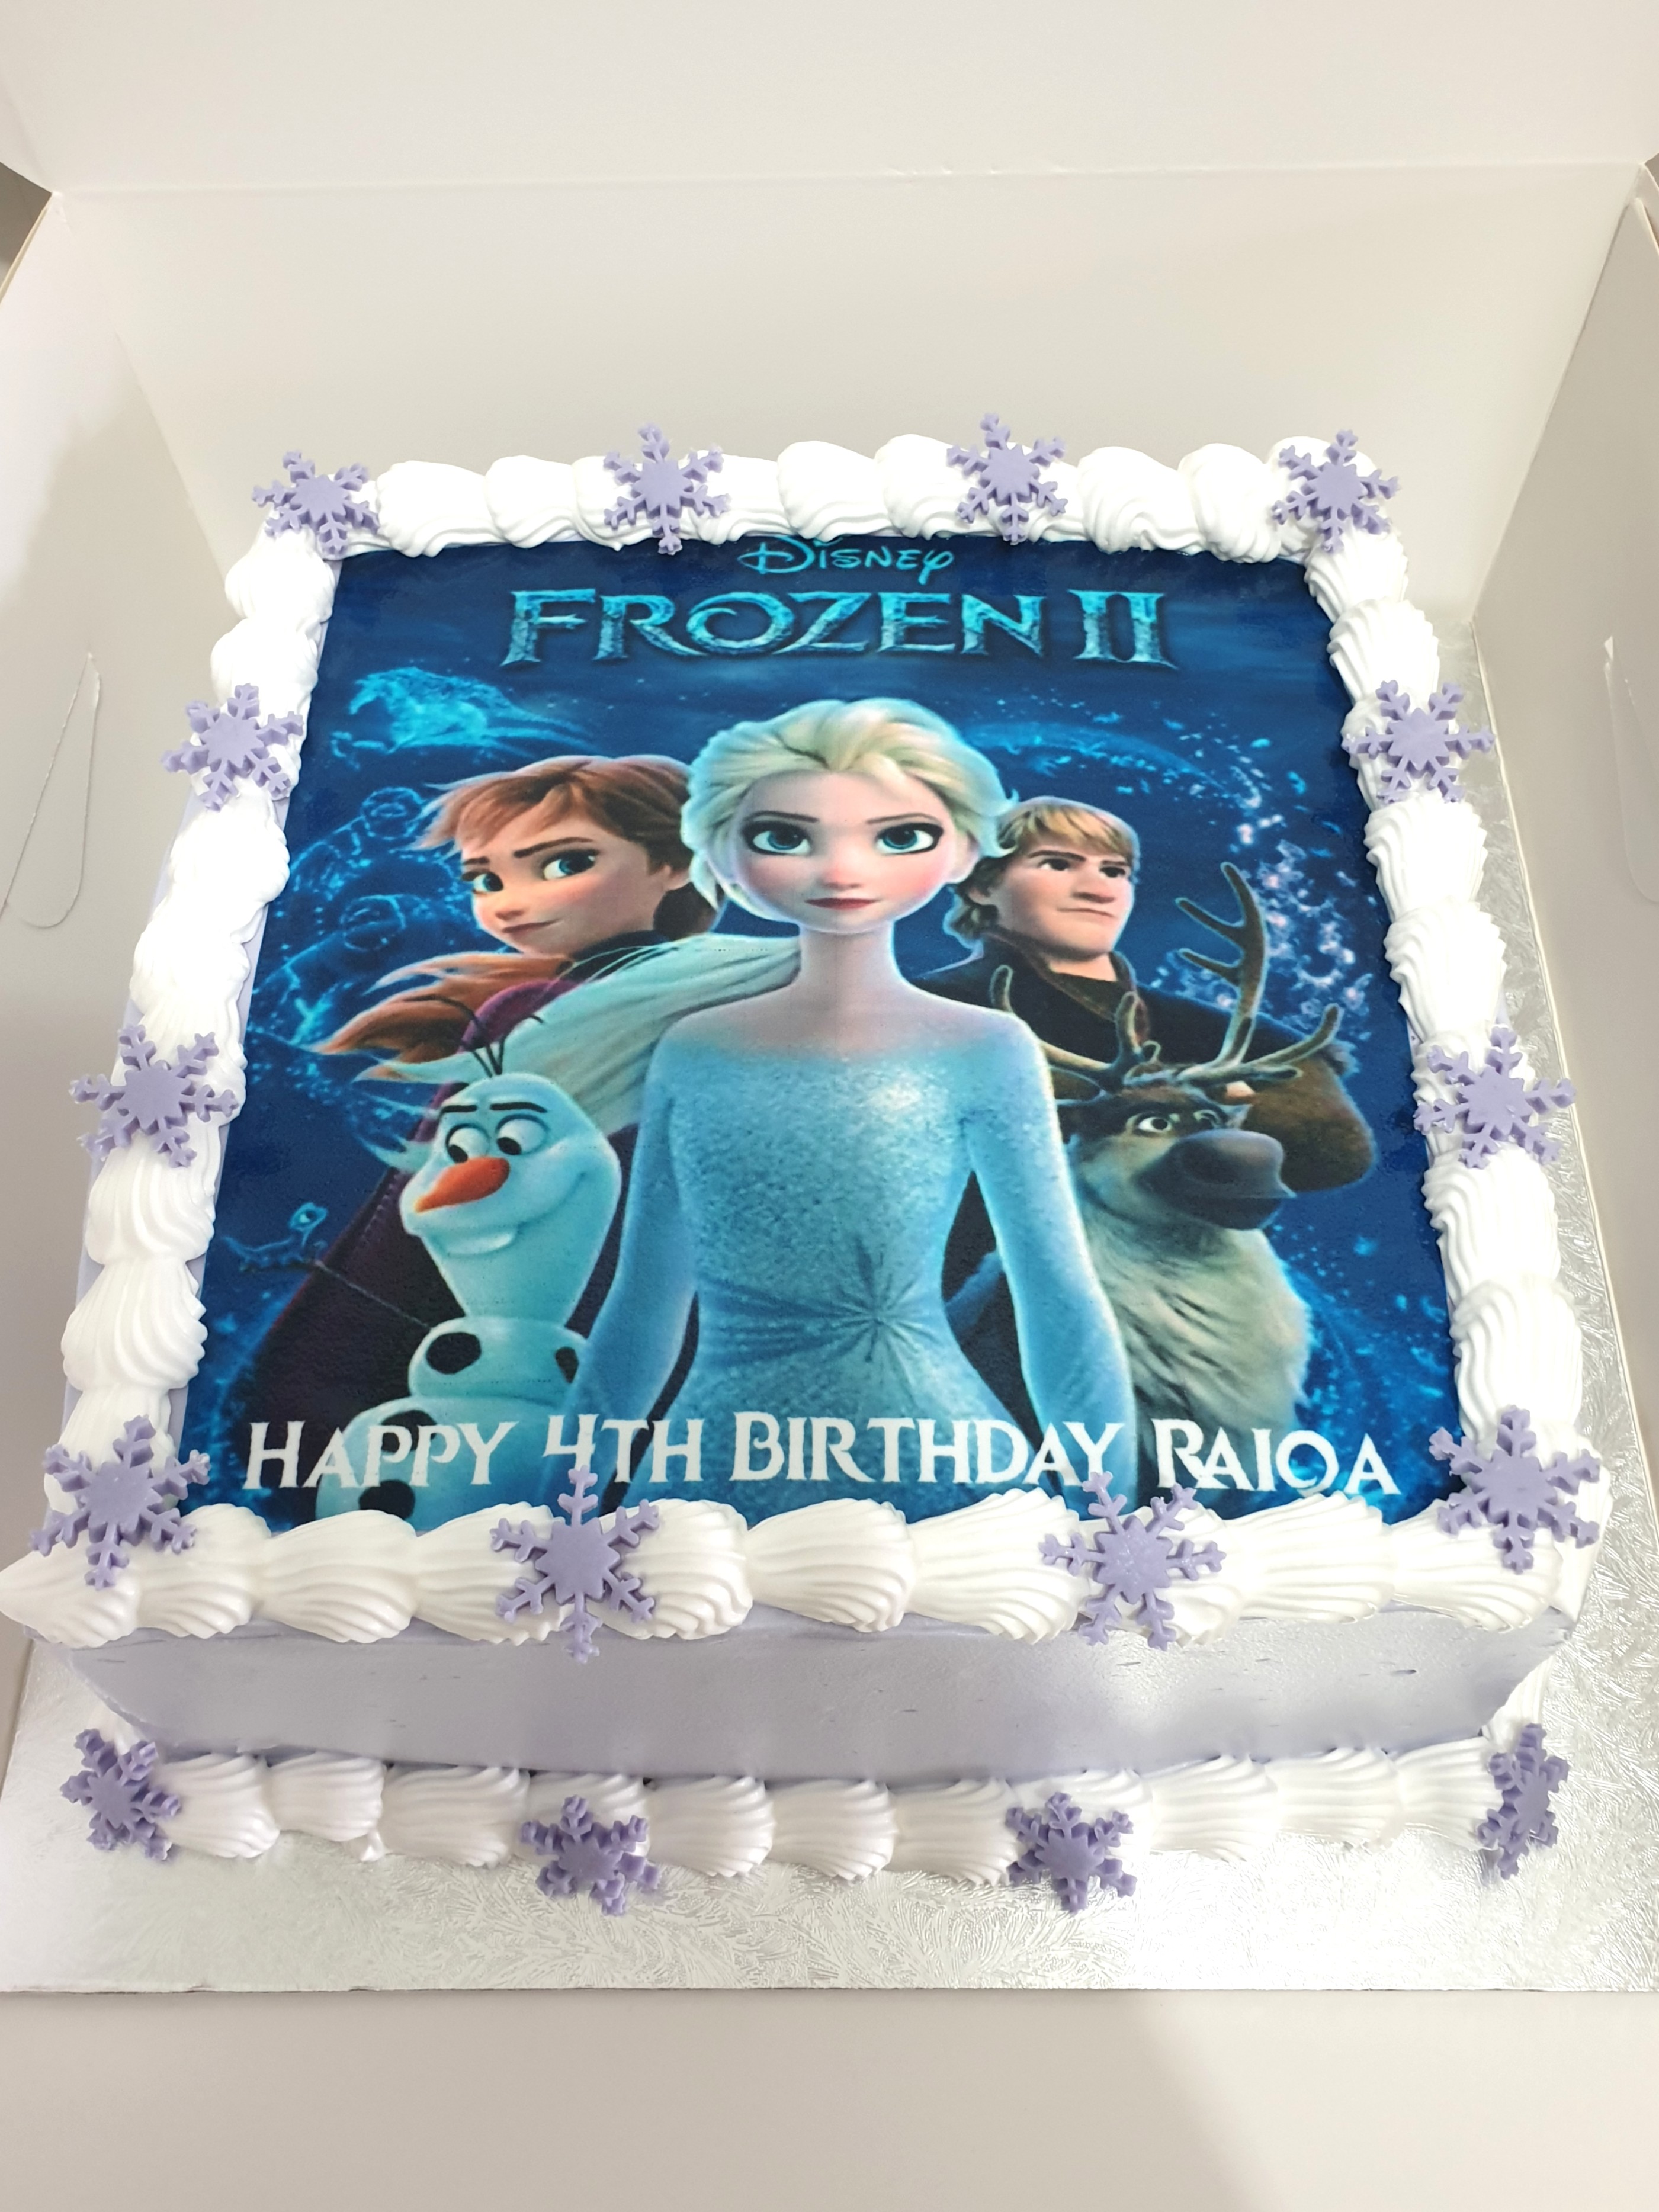 DIY Elsa Anna Princess Cake- Party Cake Ideas - Kukkr Cakes